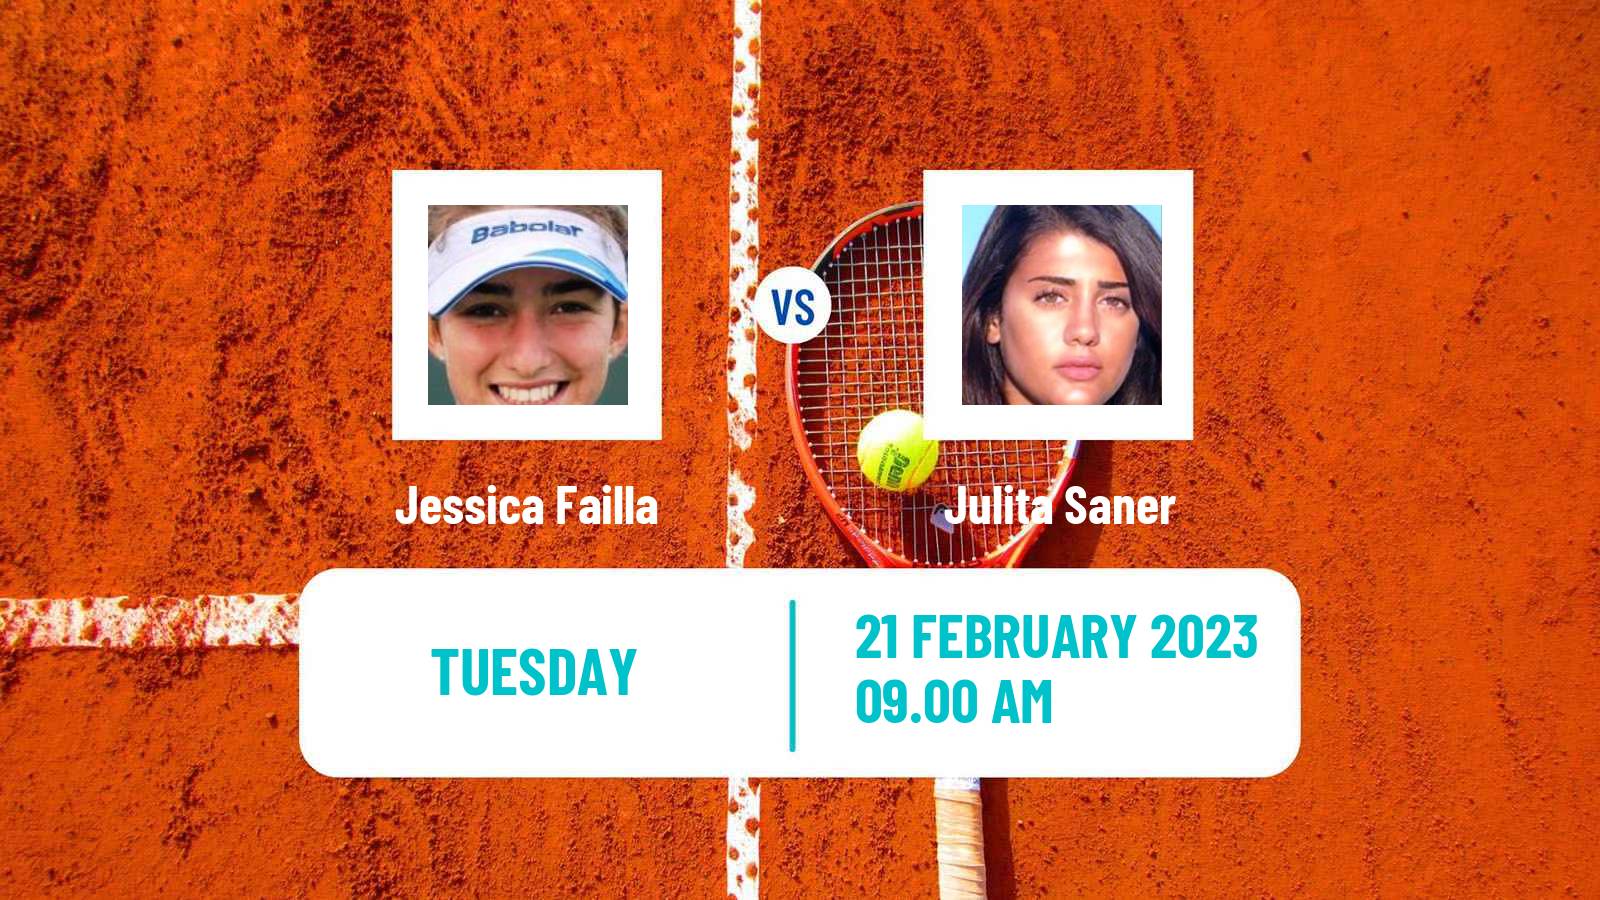 Tennis ITF Tournaments Jessica Failla - Julita Saner